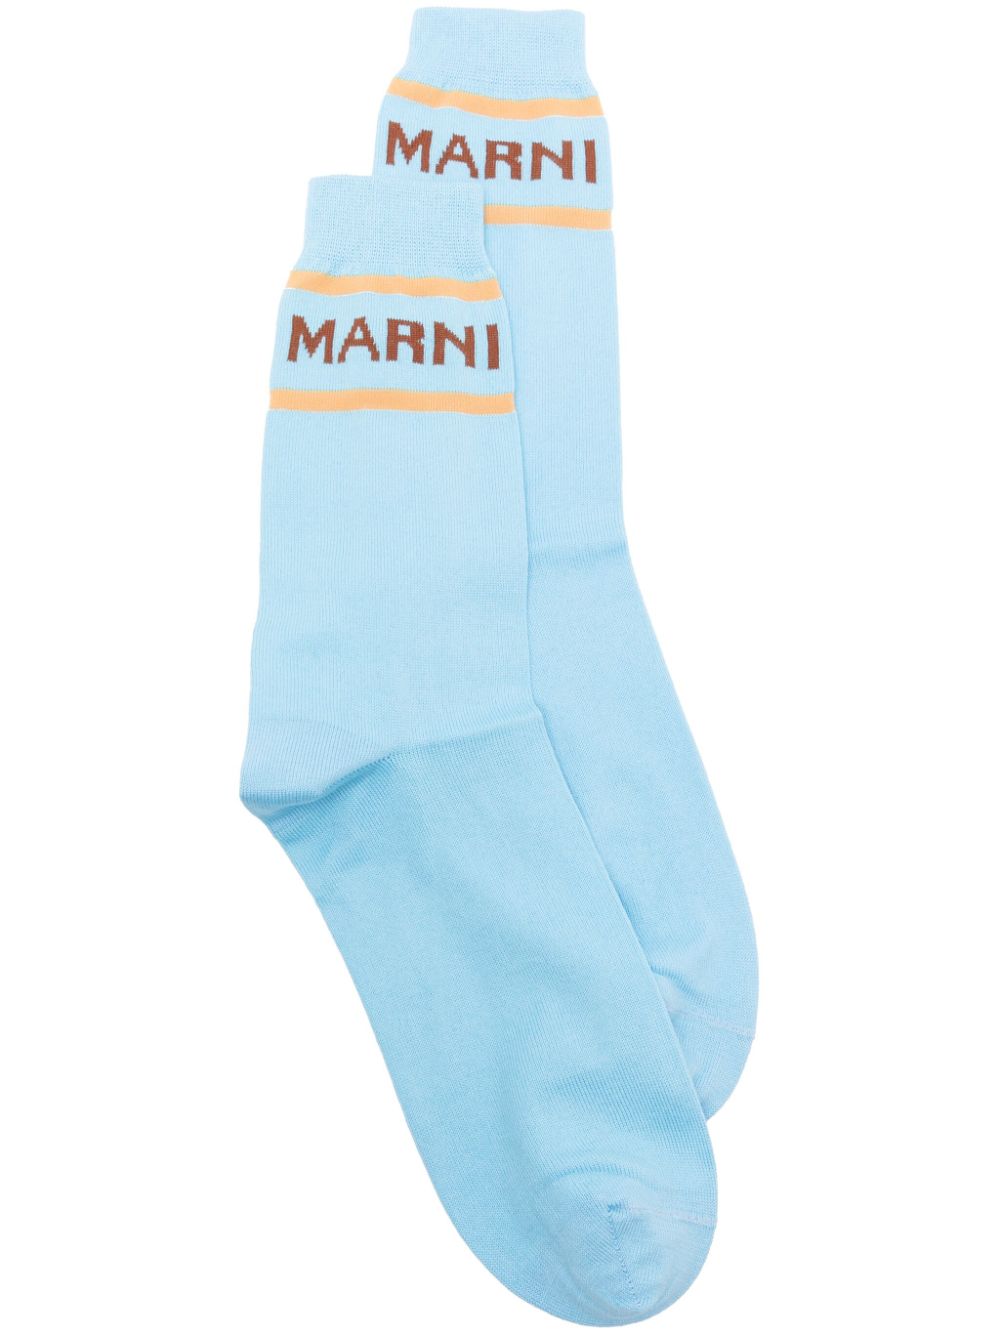 Marni Socken mit Jacquard-Logo - Blau von Marni